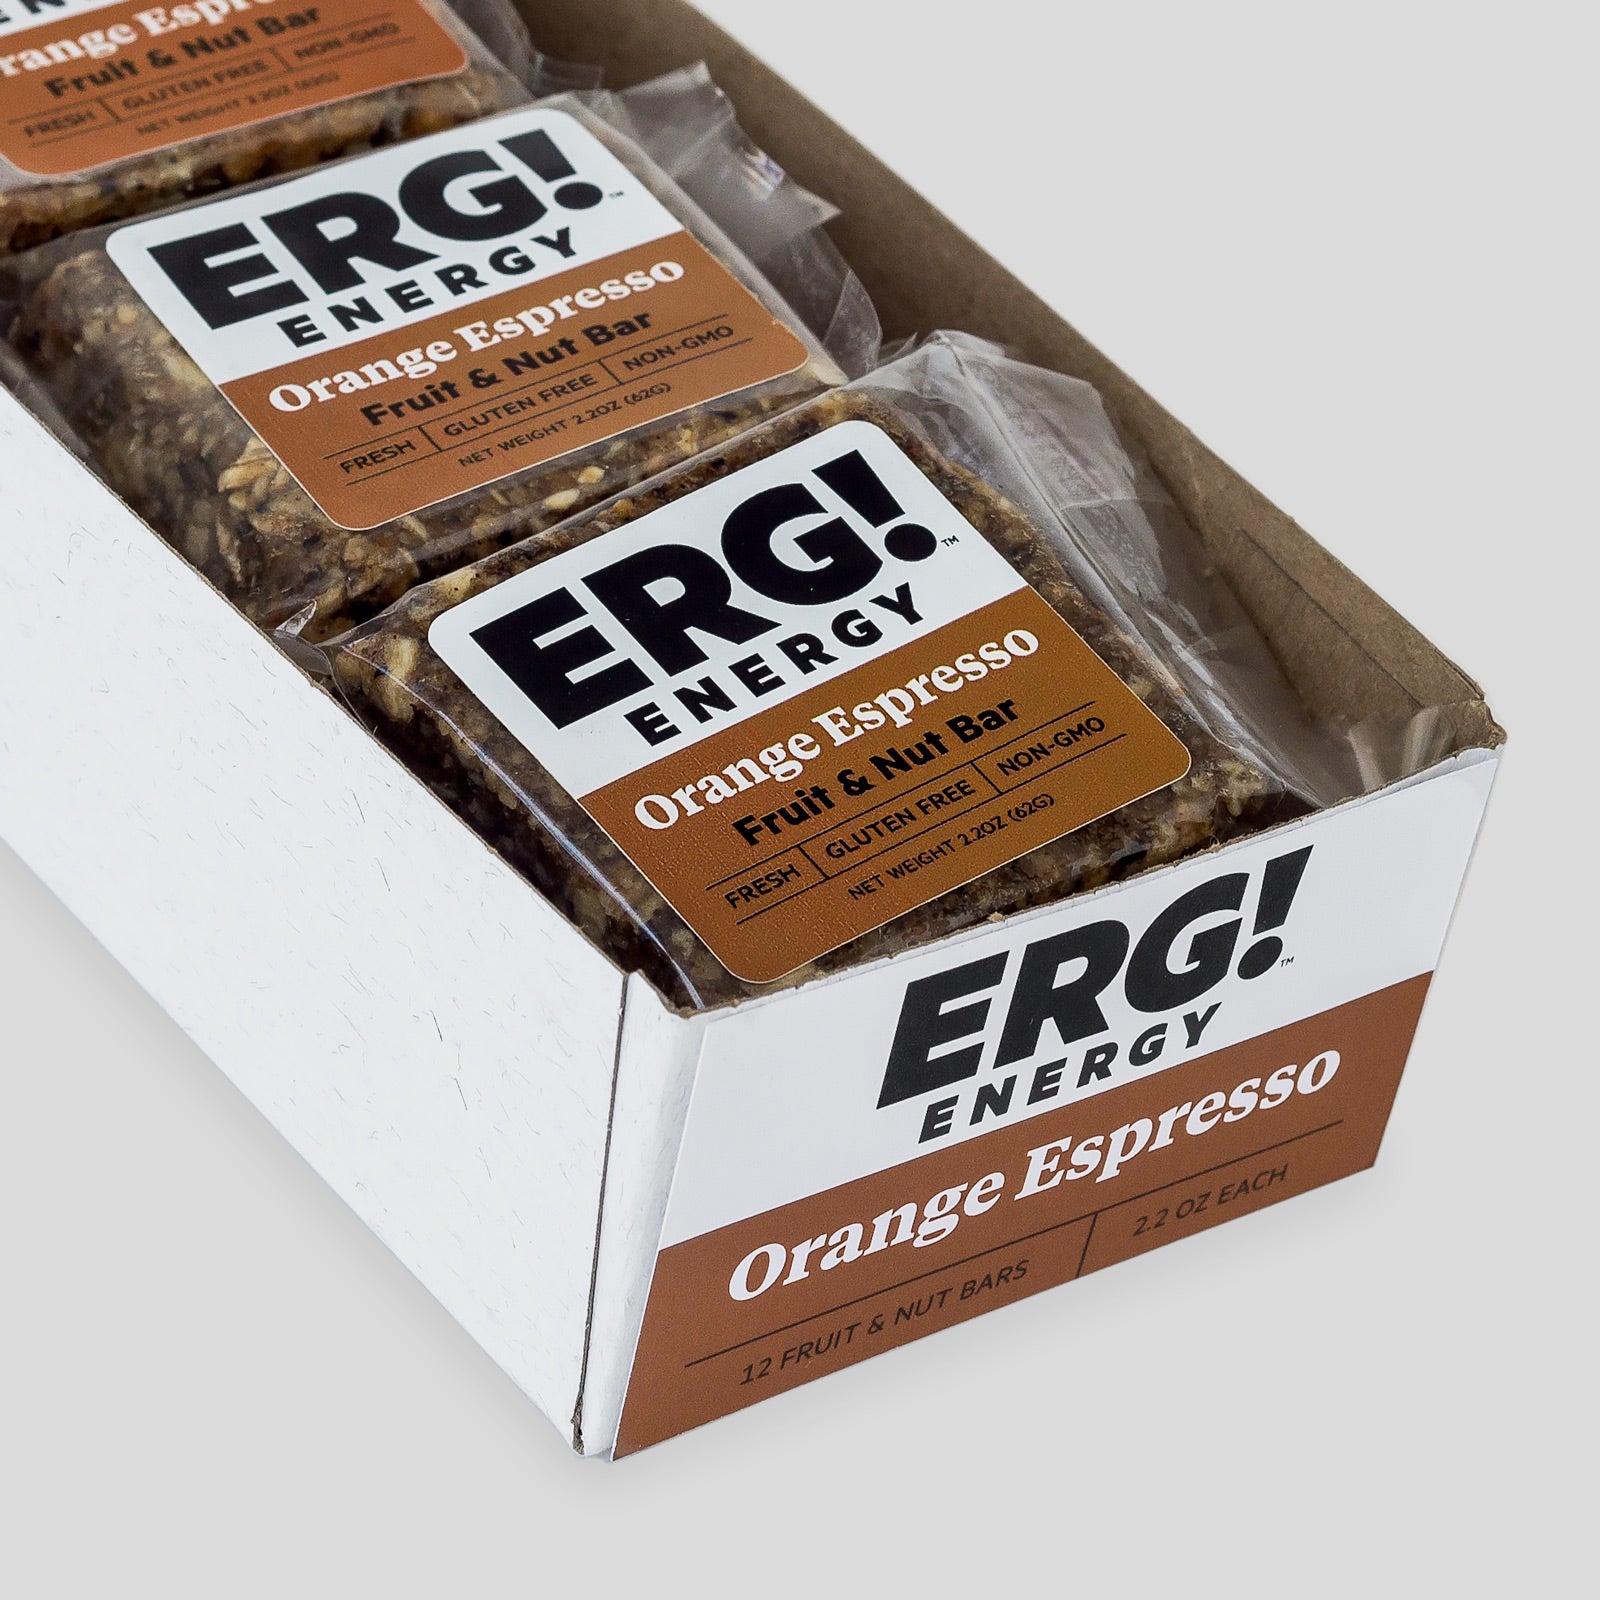 Orange Espresso ERG! - Box of 12 Bars